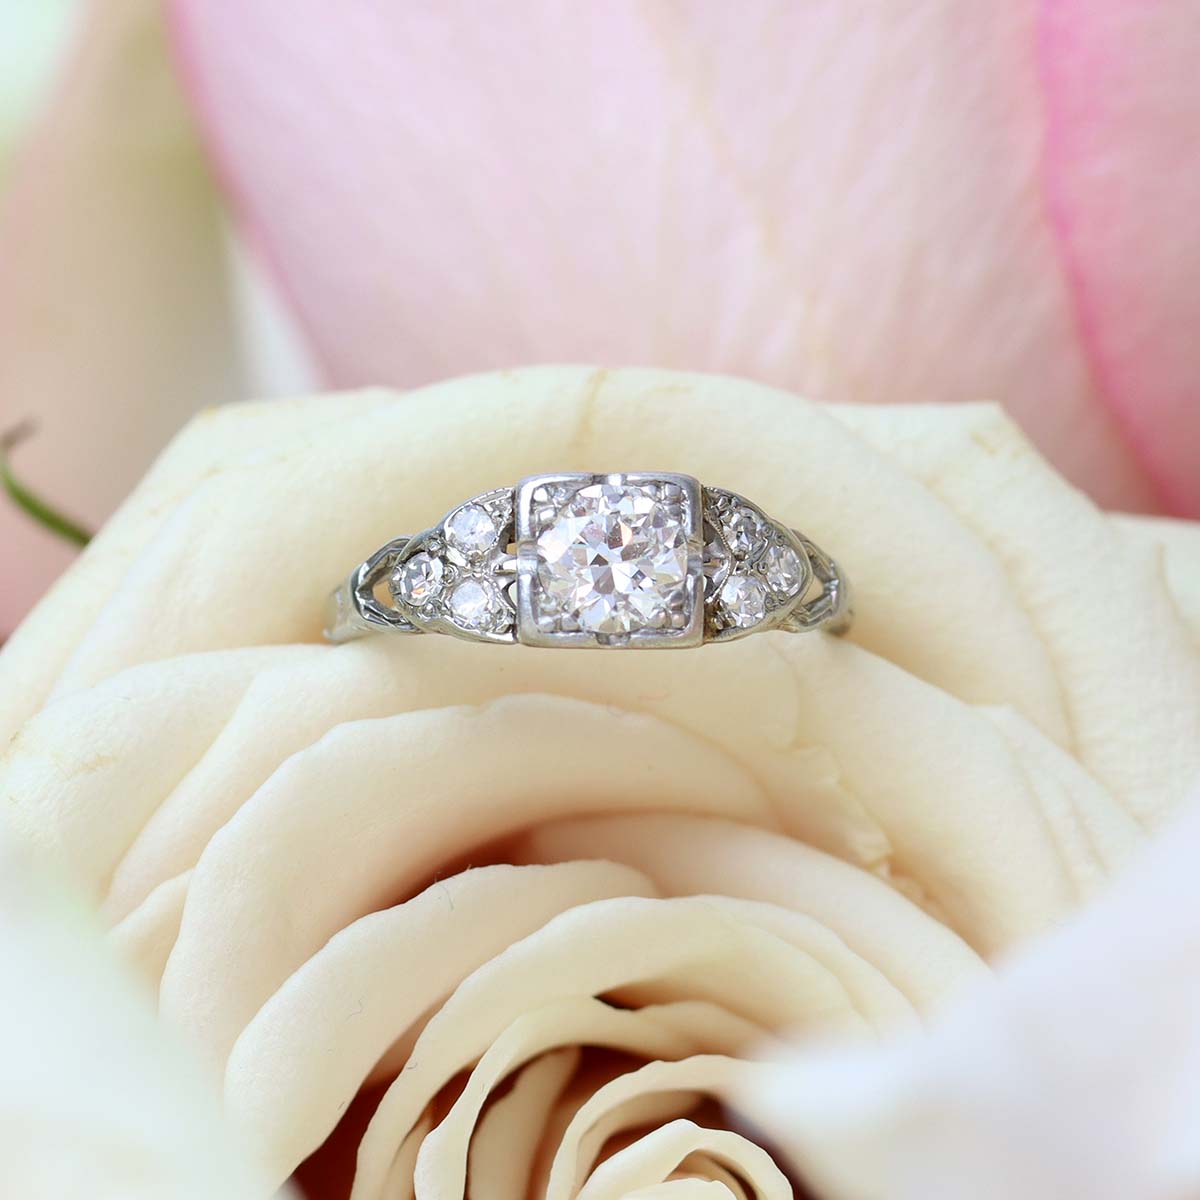 Circa 1930s Engagement Ring #VR180424-1